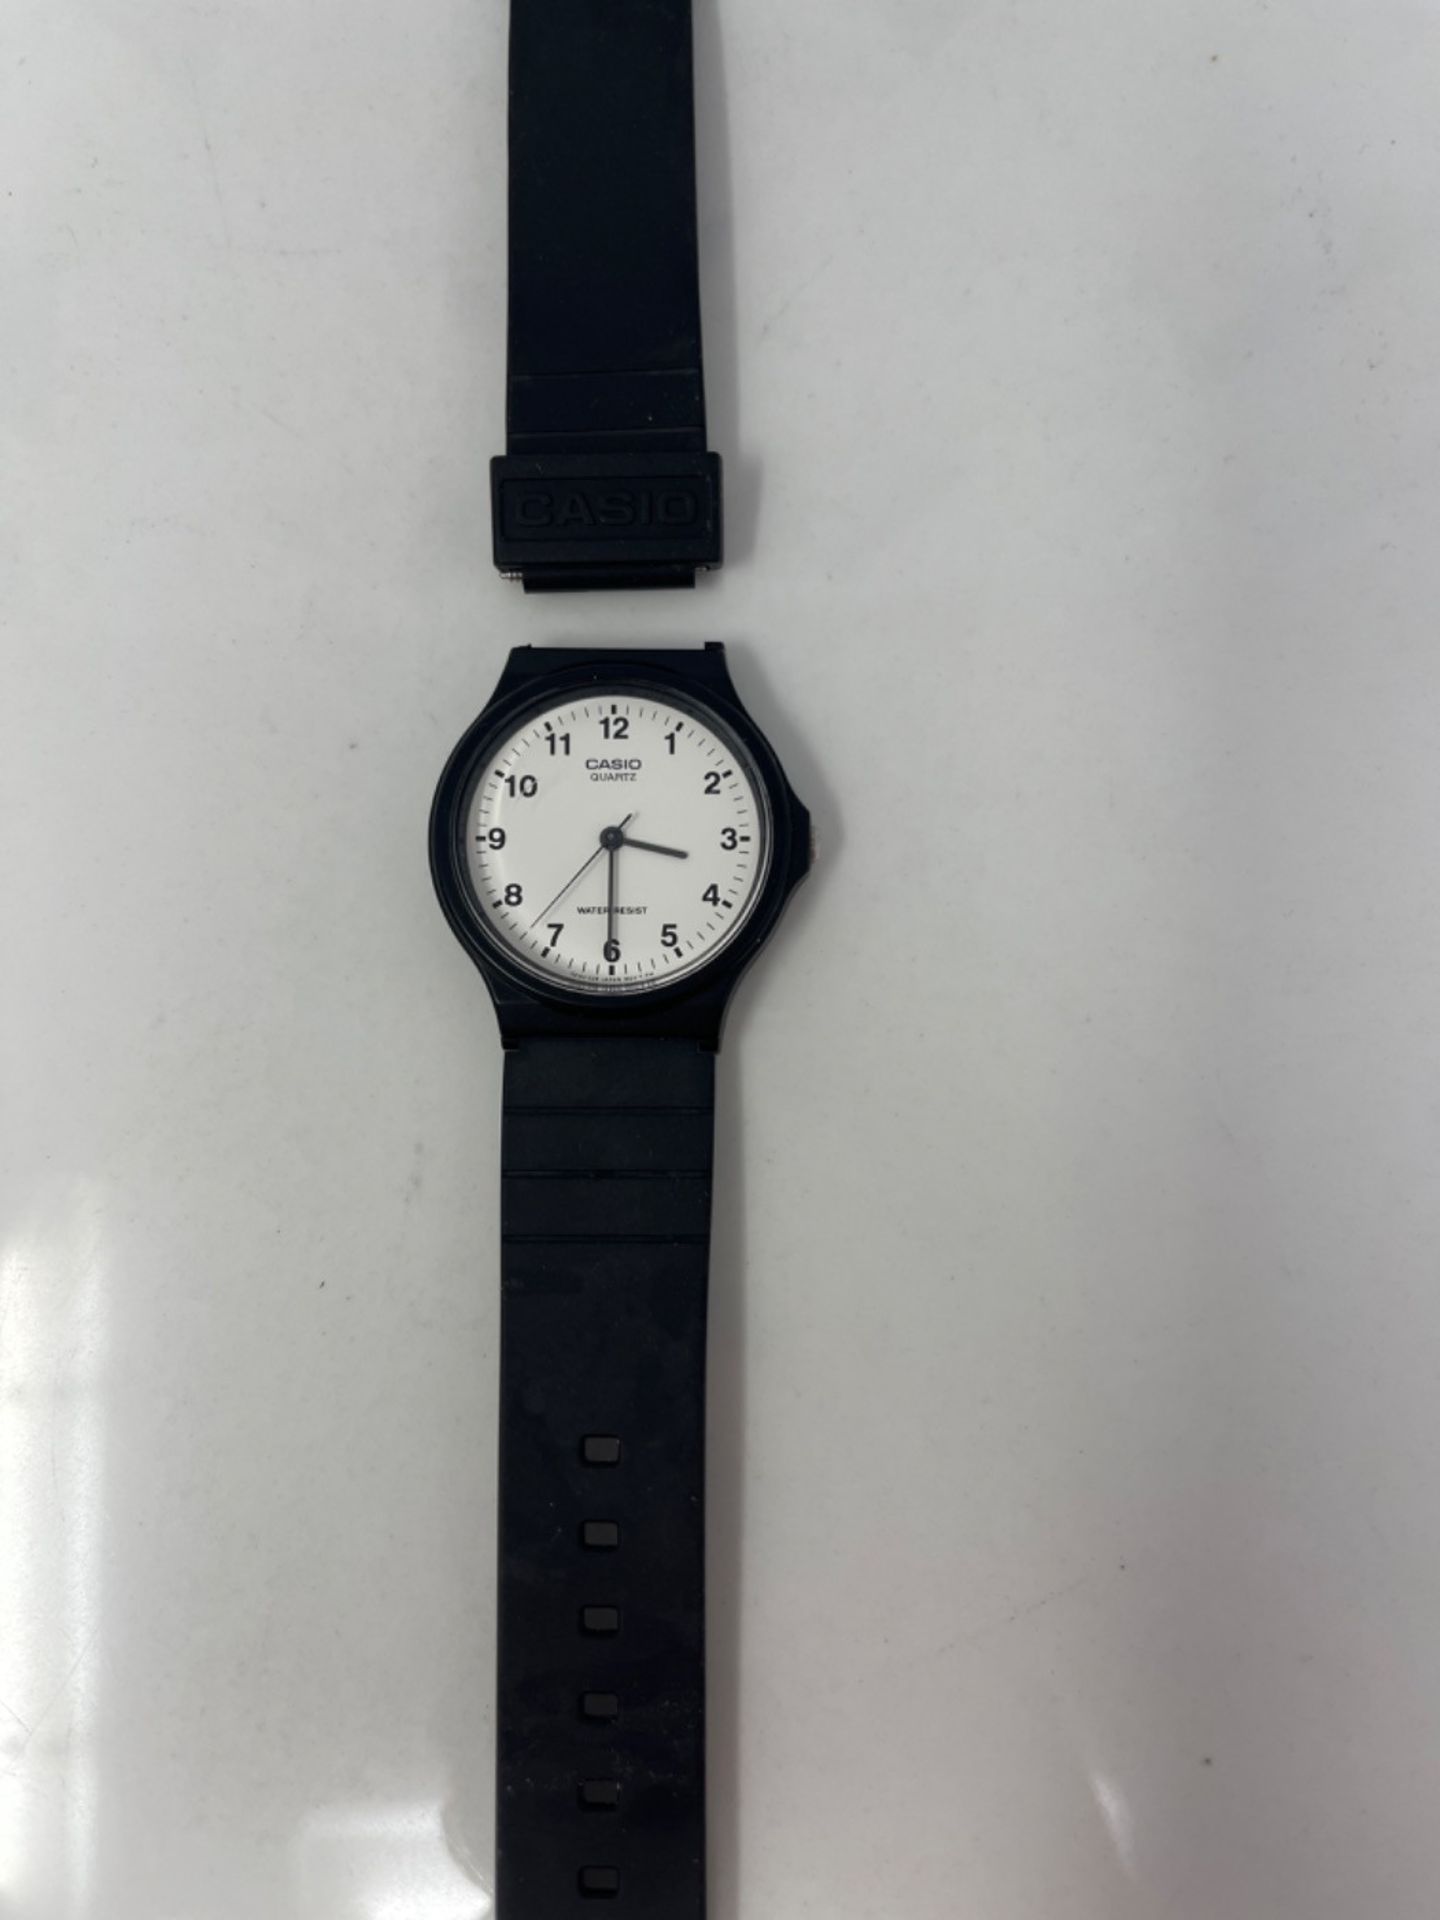 Casio Men's Quartz Analog Watch with Plastic Strap MQ-24-7BLLEG, Black, Strip - Image 2 of 2